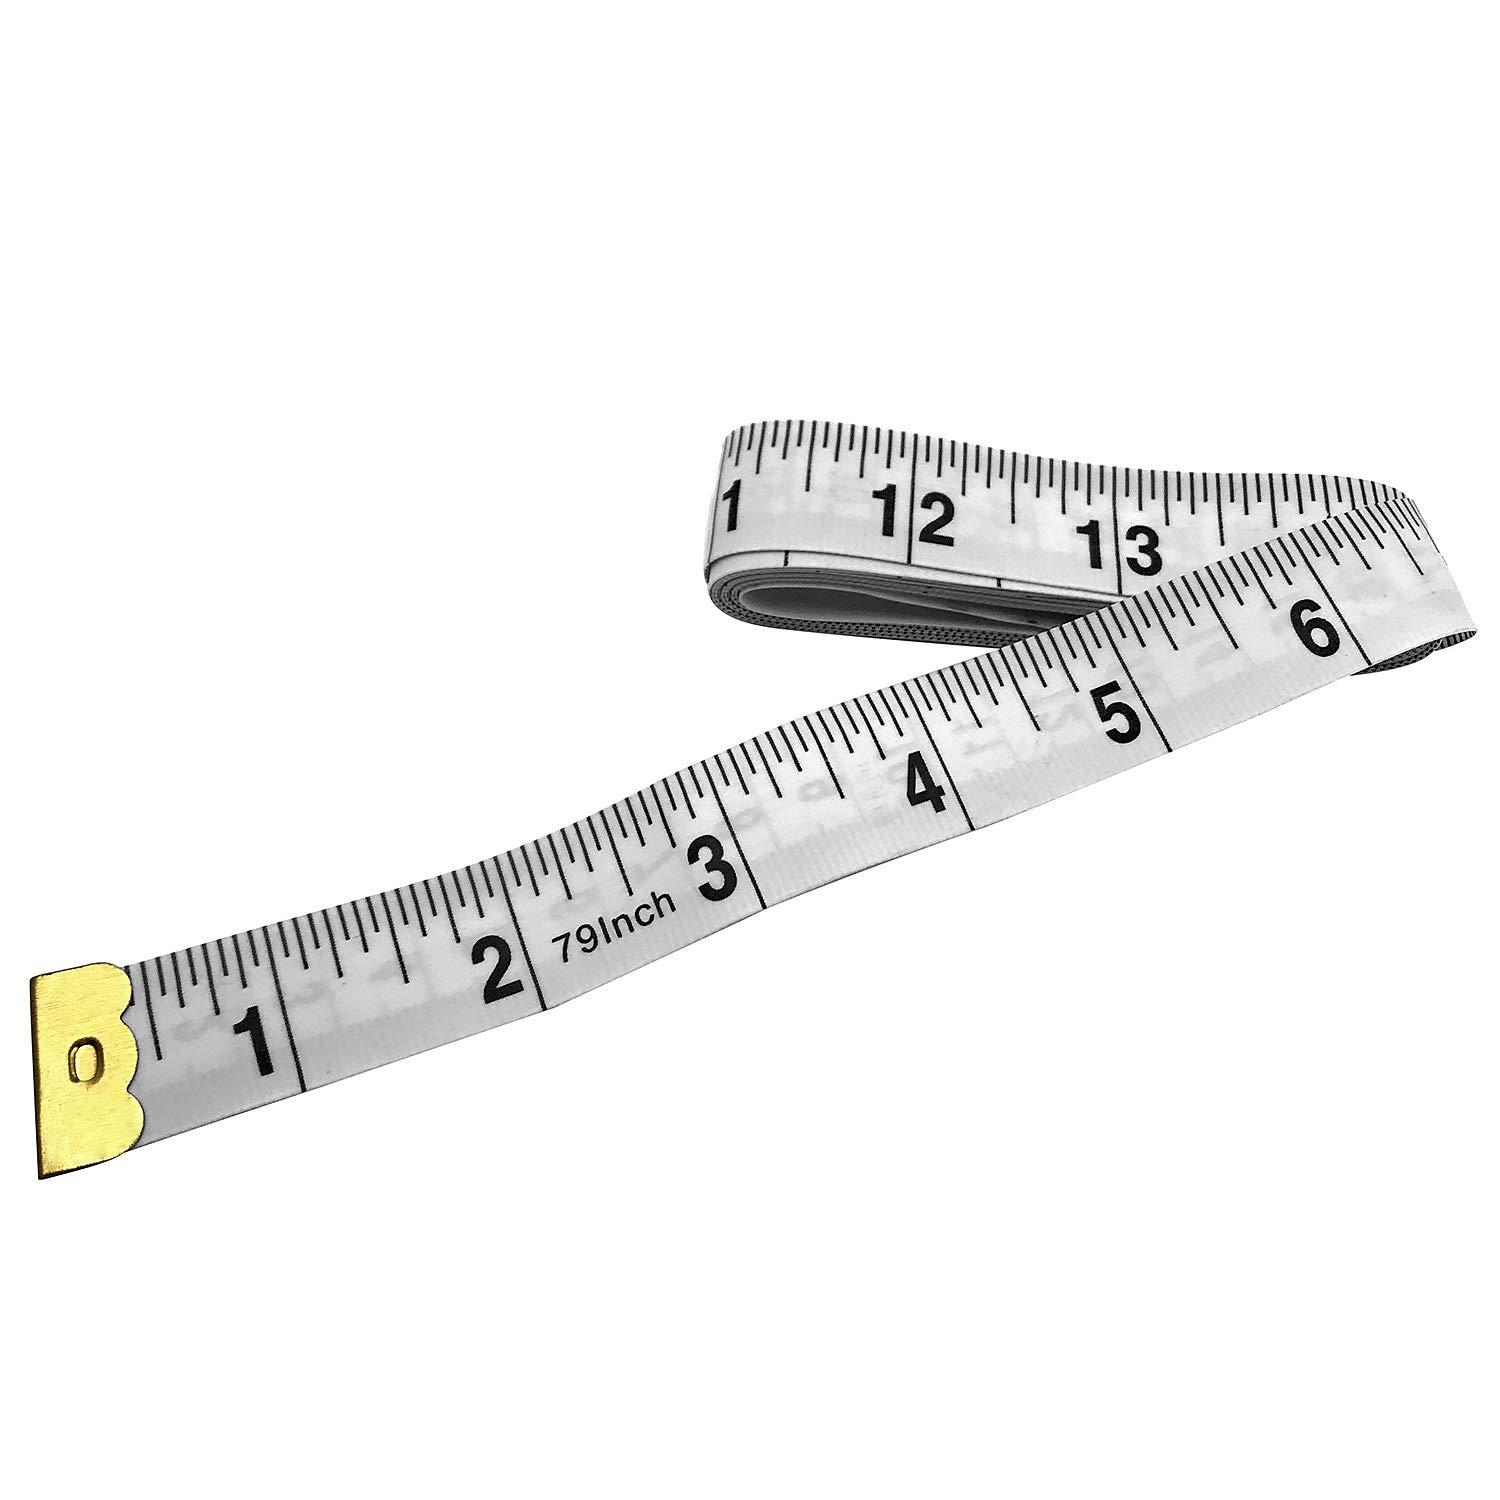 5' (60) Retractable Measuring Tape